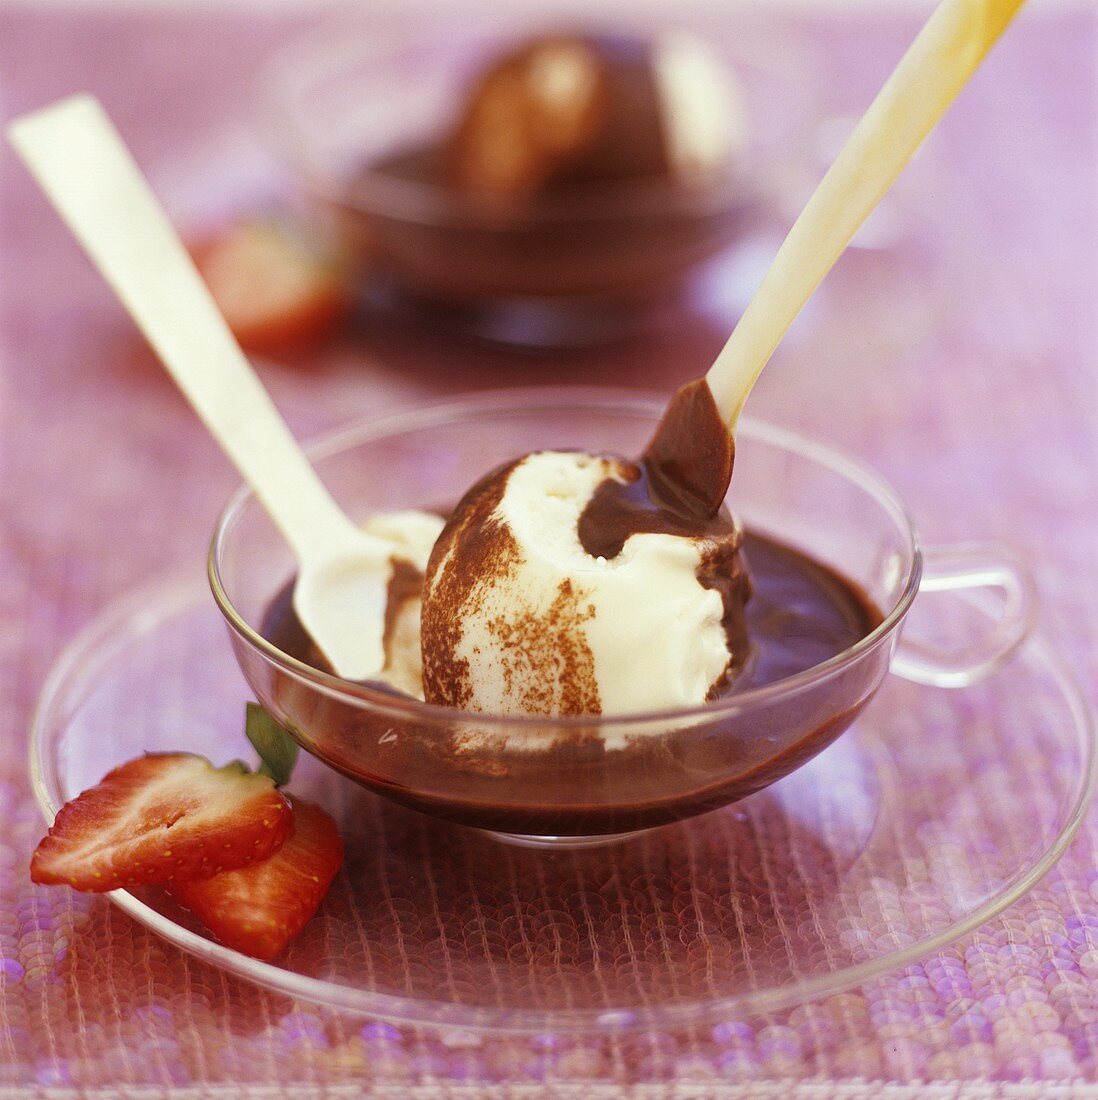 Vanilla ice cream with chocolate sauce